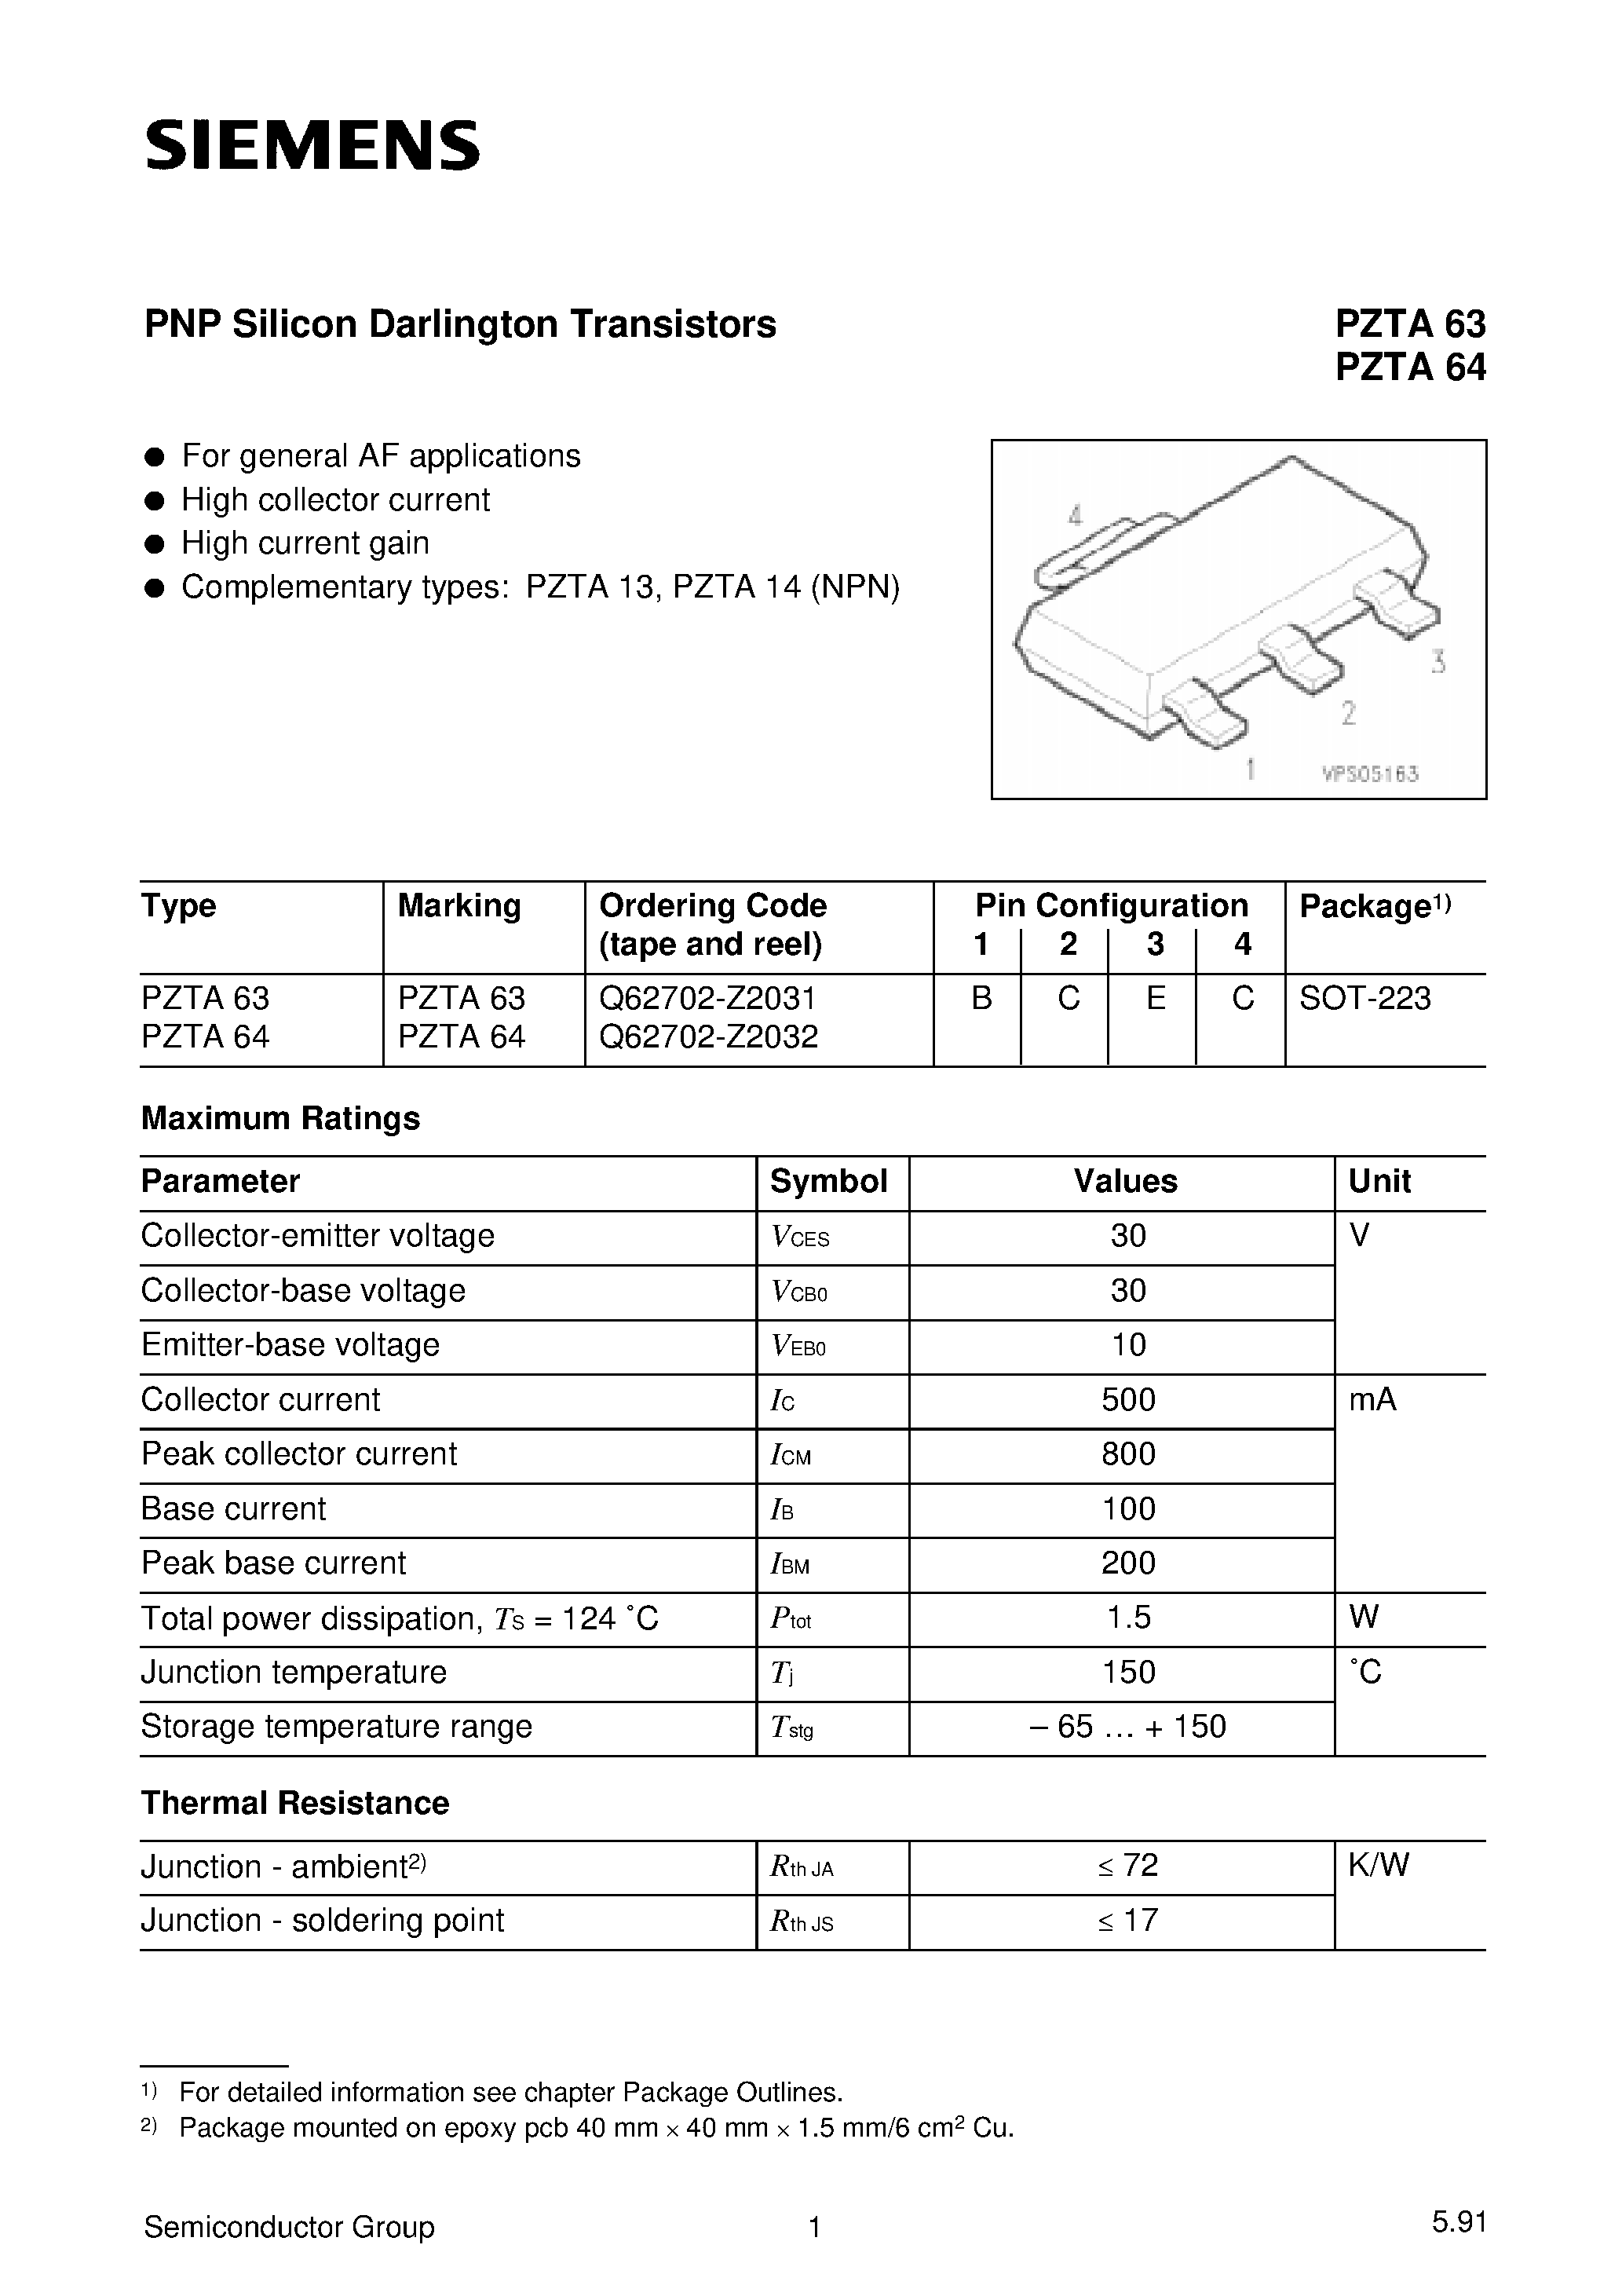 Datasheet PZTA64 - PNP Silicon Darlington Transistors page 1